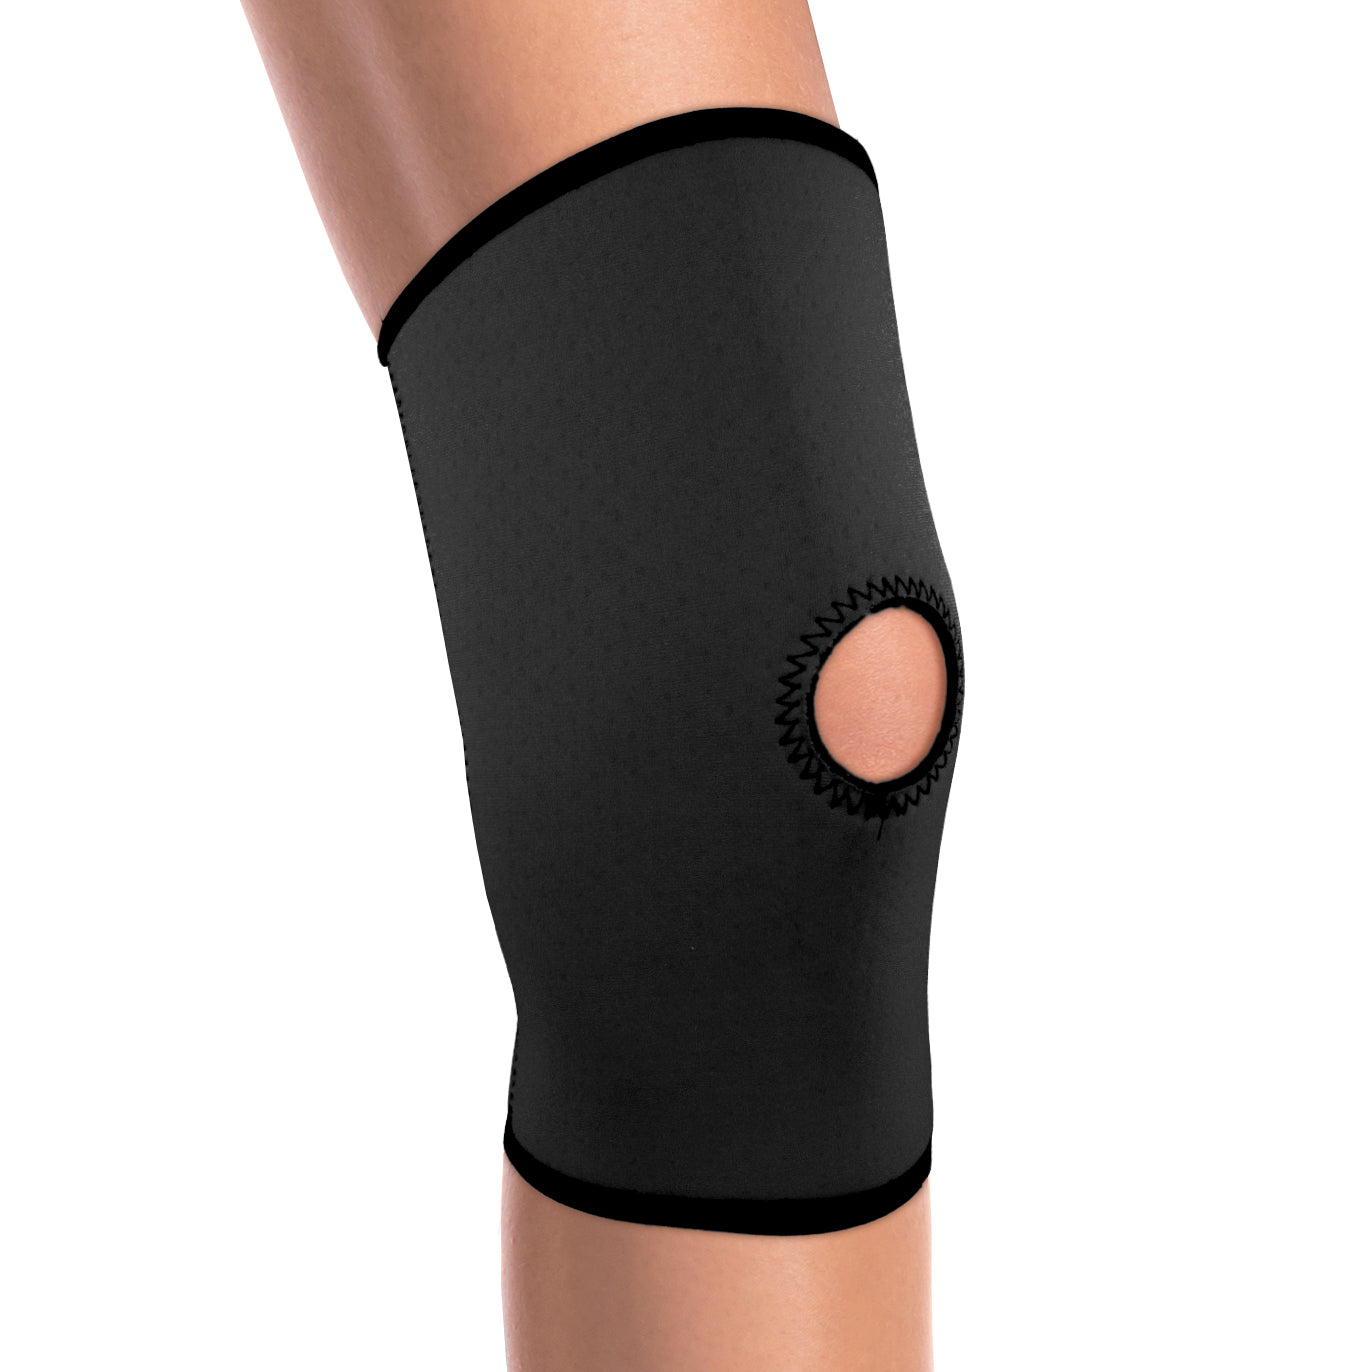 Open Patella Knee Stabilizer, Knee Braces & Sleeves